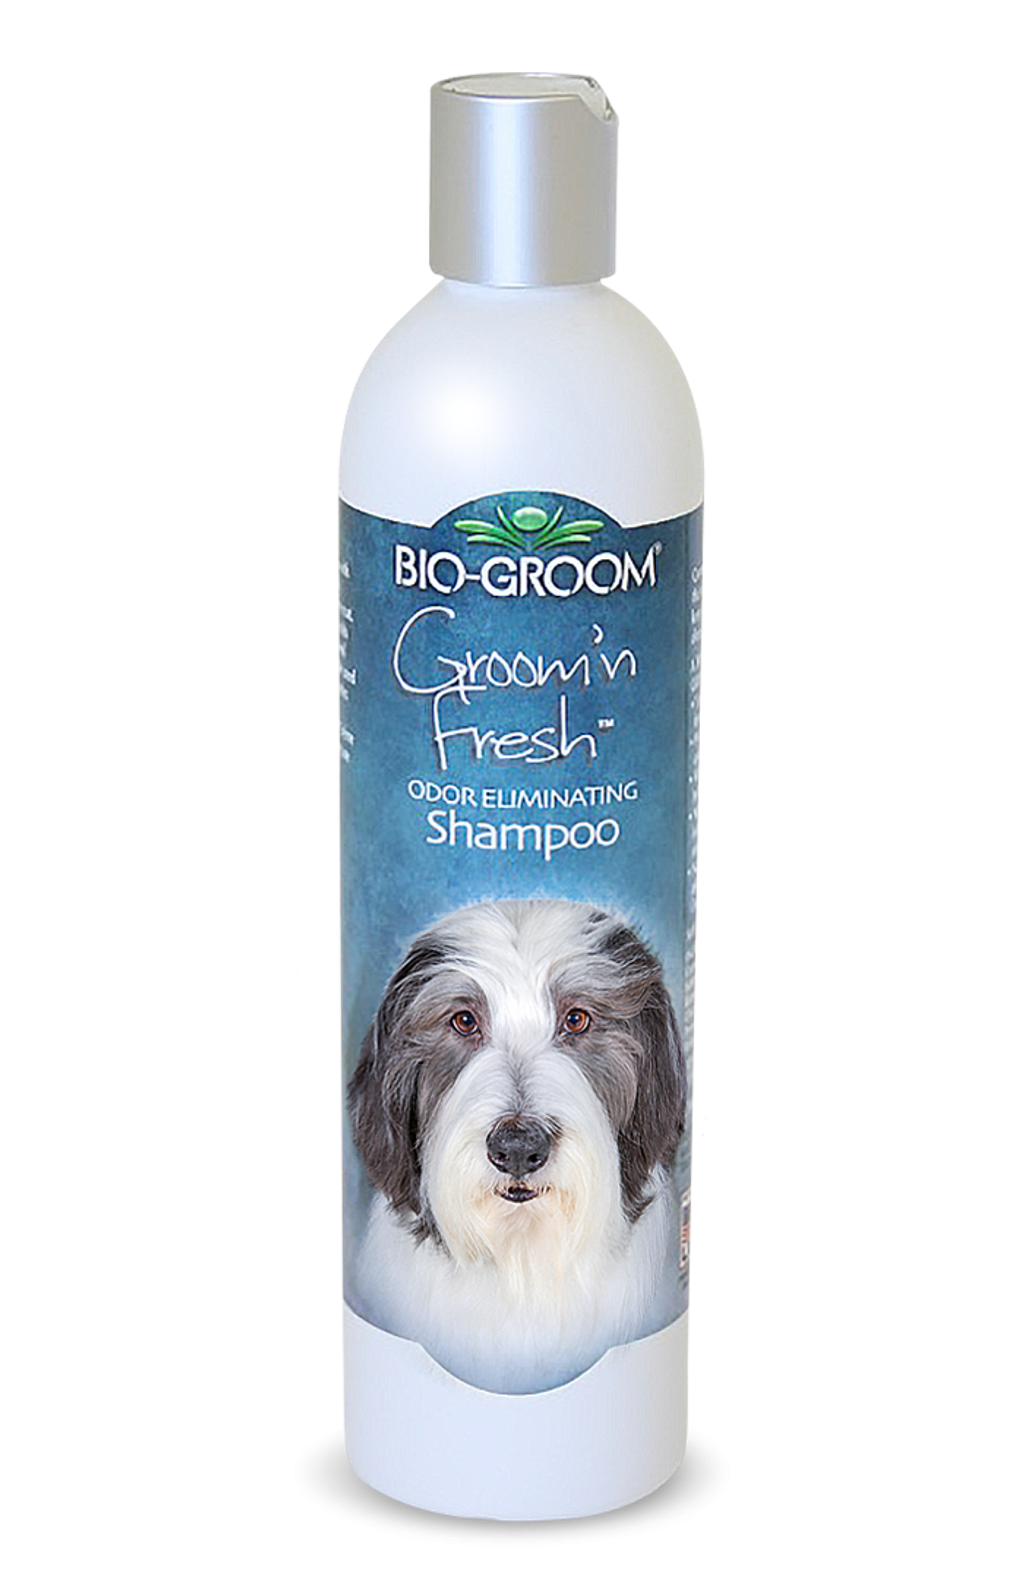 biogroom_dog_shampoo_groomnfresh_12oz-700x1080.png